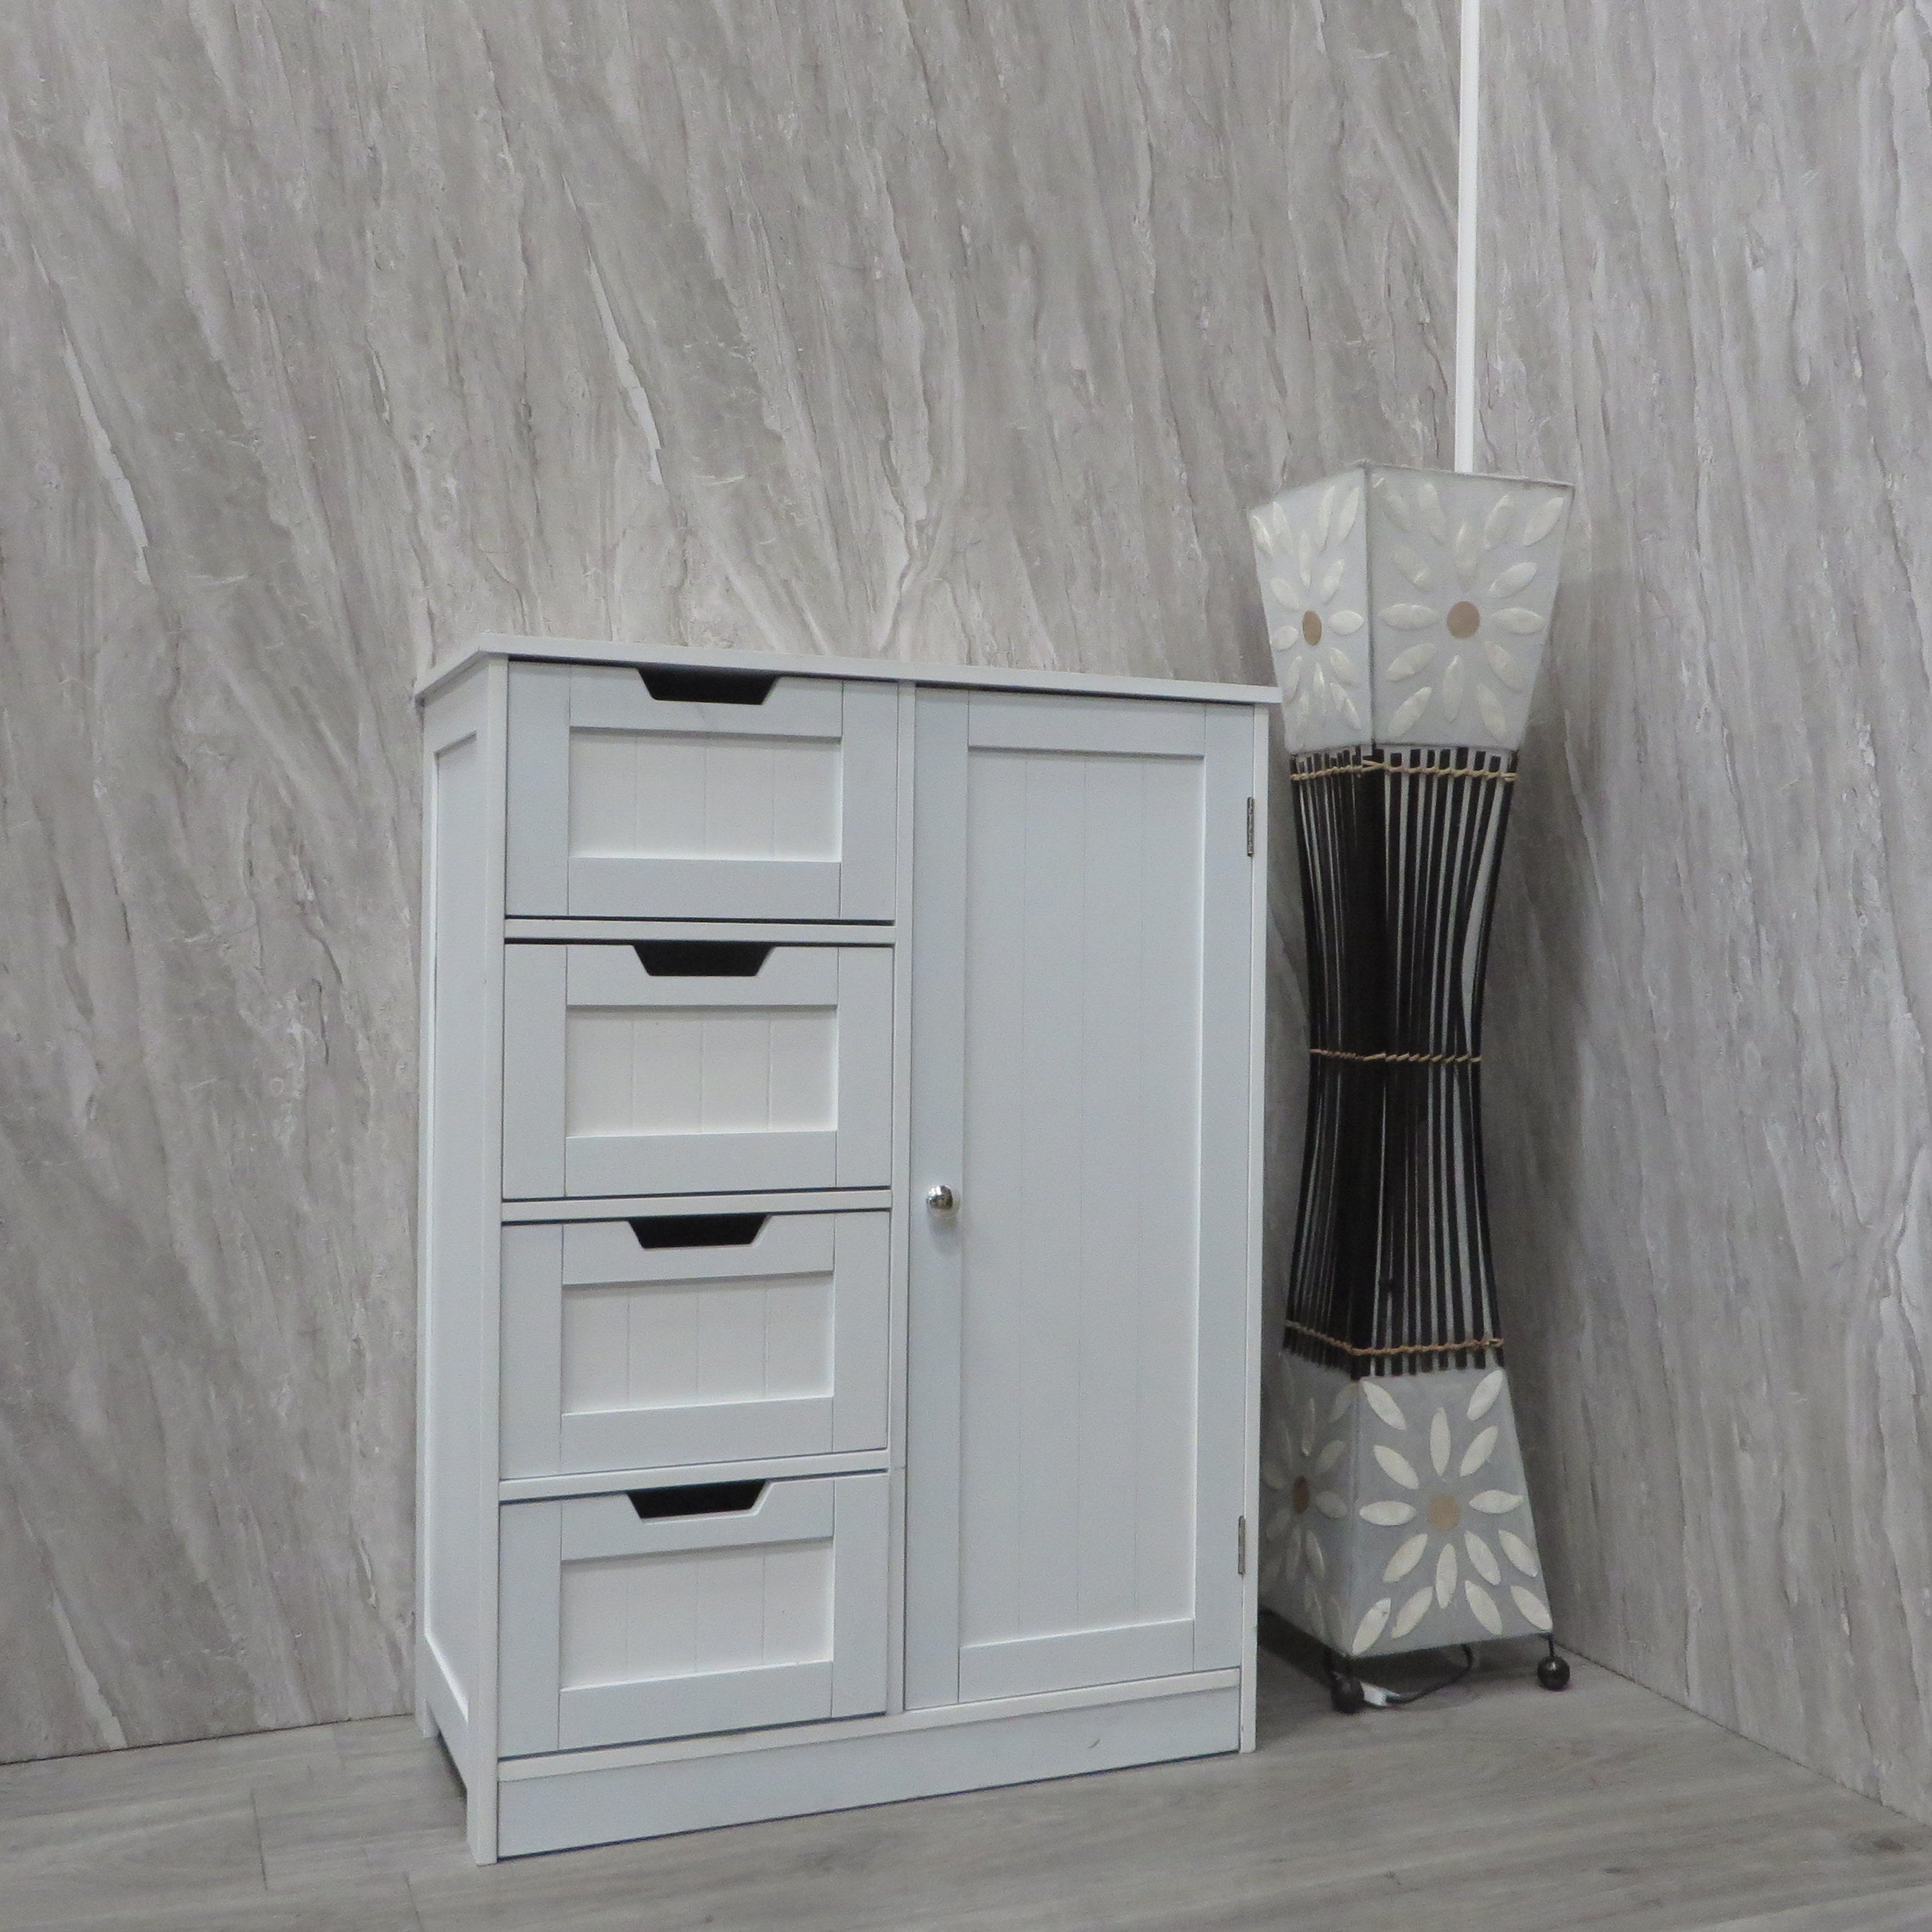 Grey Natural Sandstone 10mm Bathroom Cladding Shower Wall Panels